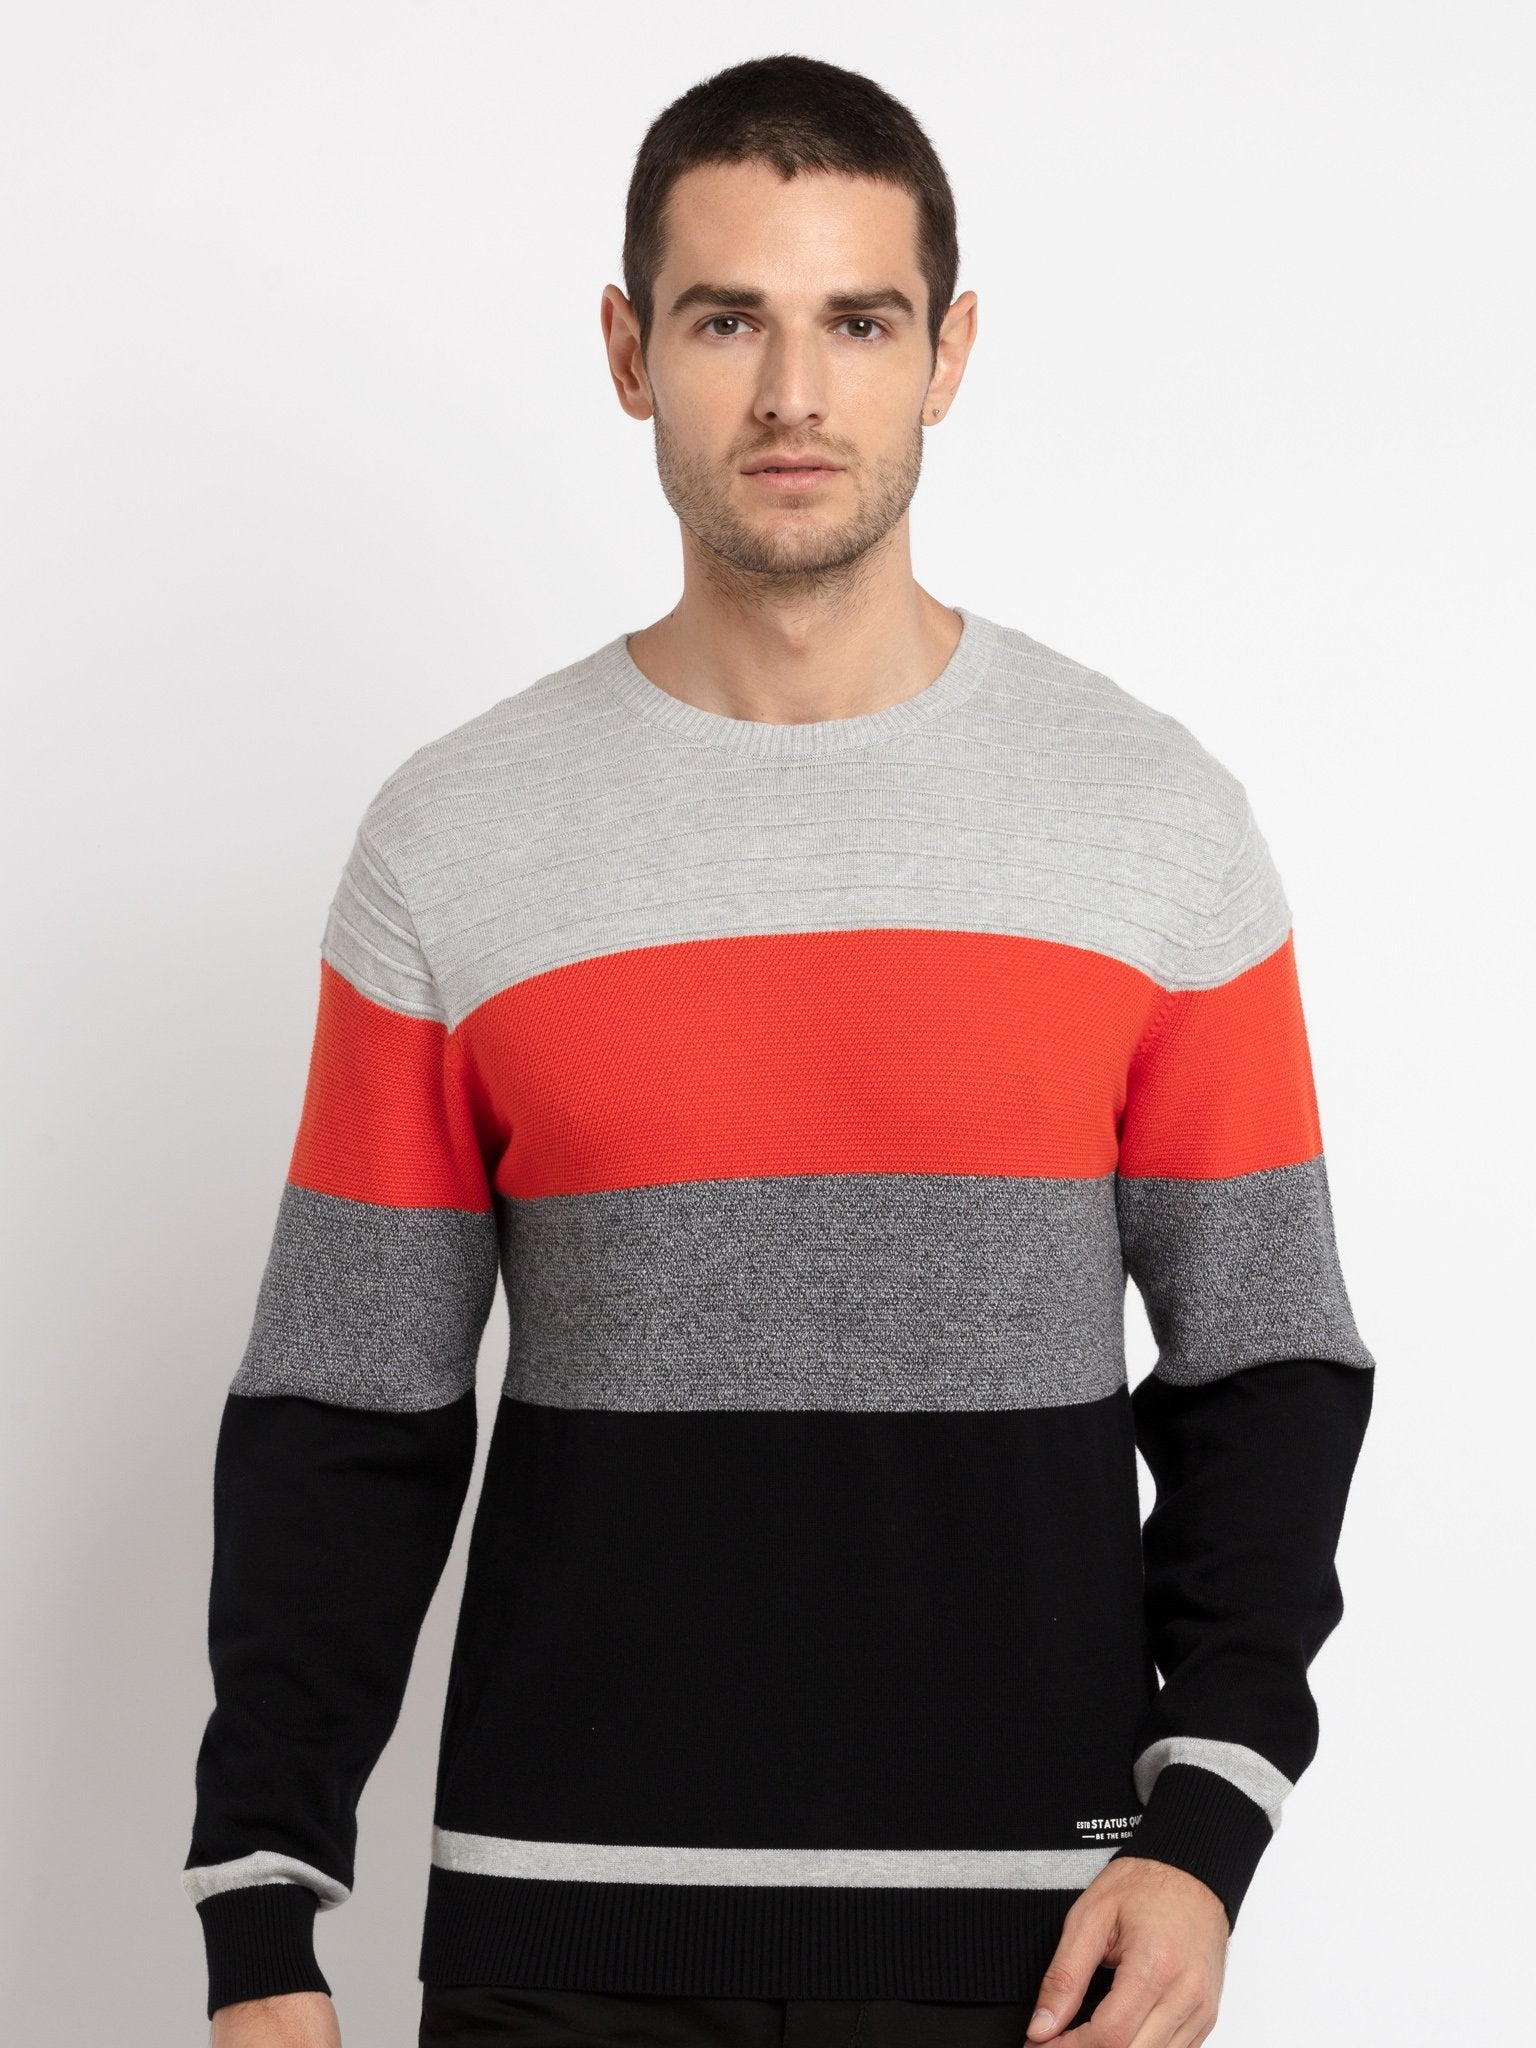 Status Quo | Men's Grey Acrylic Solid Sweaters